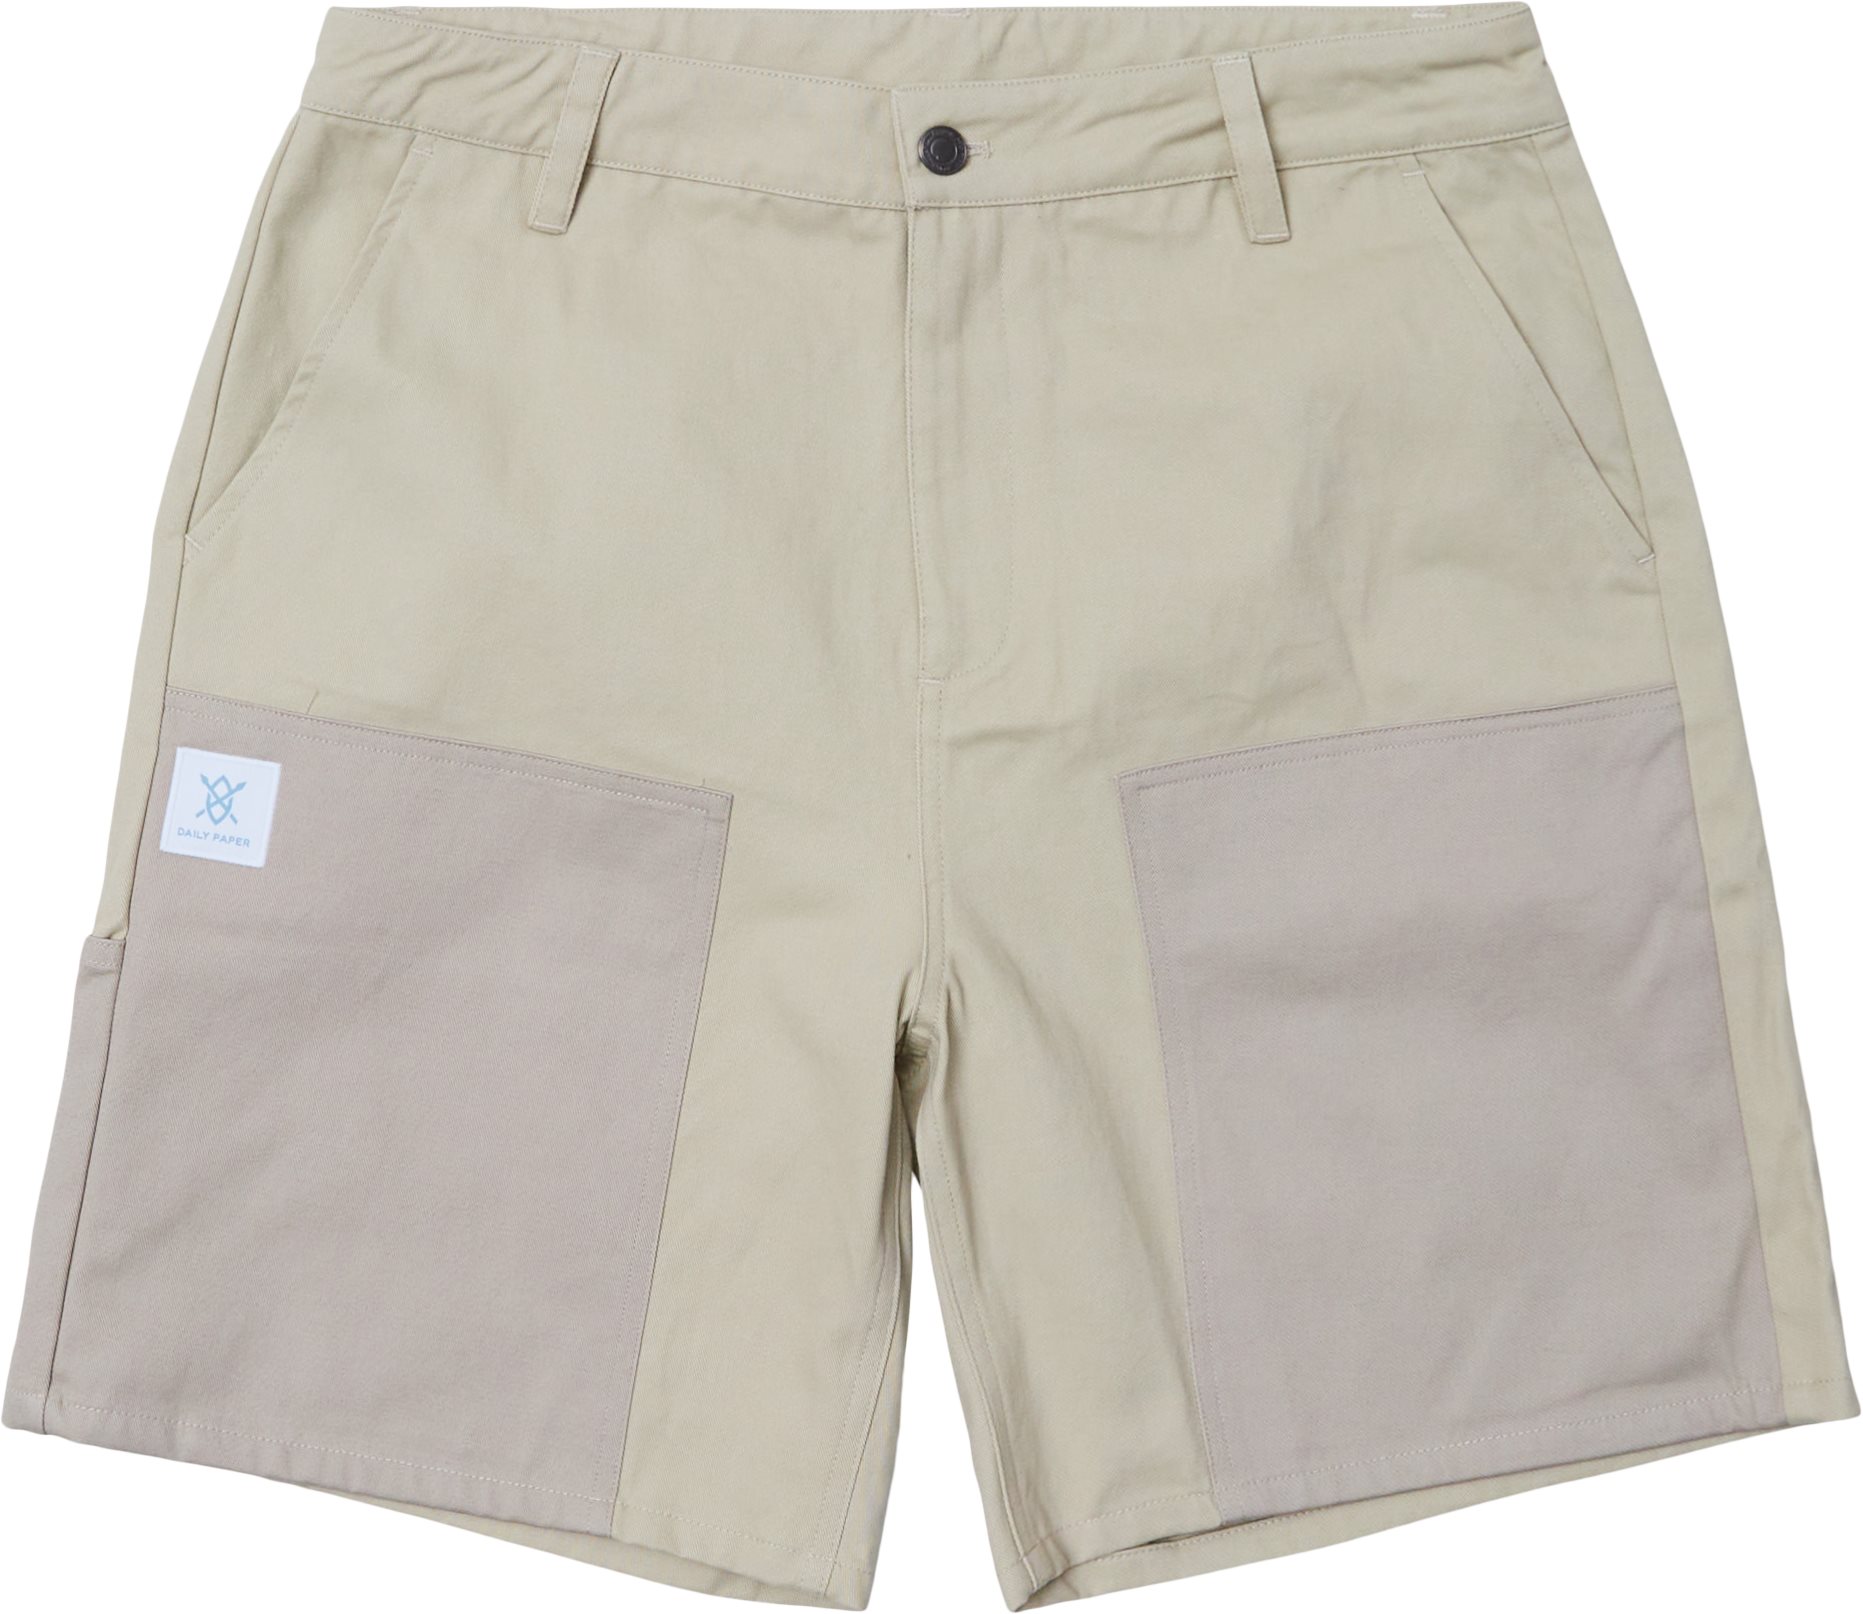 Mevani Shorts - Shorts - Regular fit - Sand